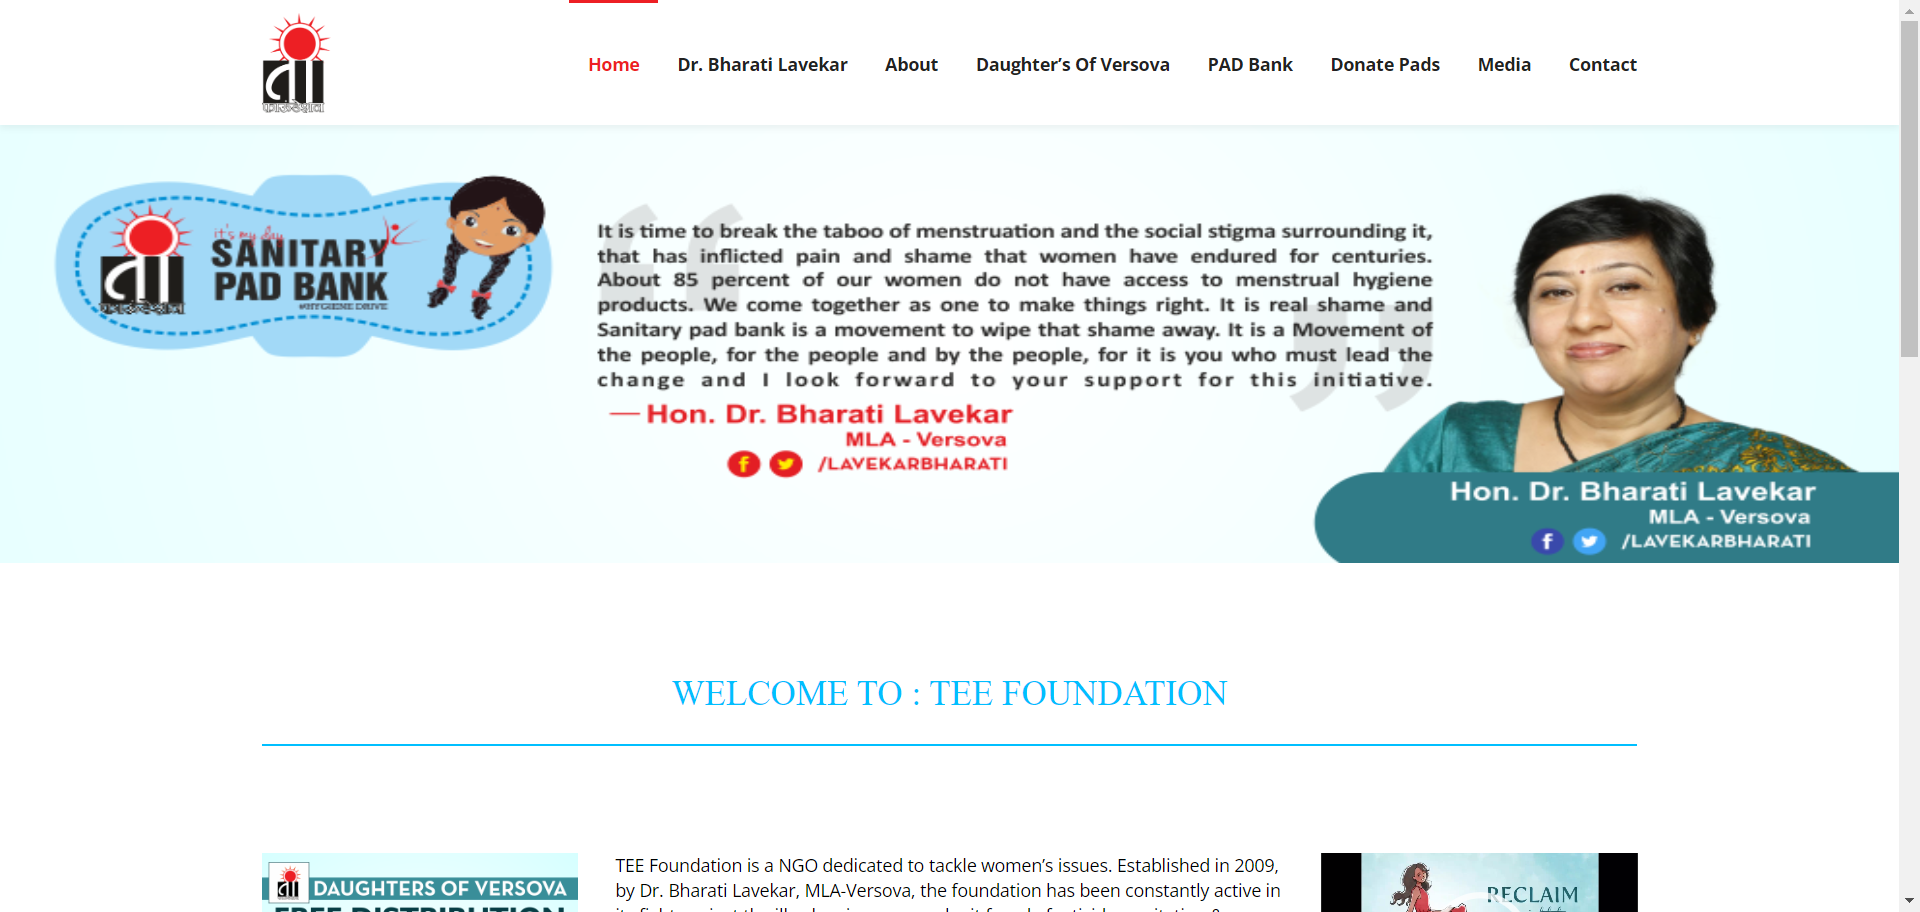 teefoundation elite website first screen image